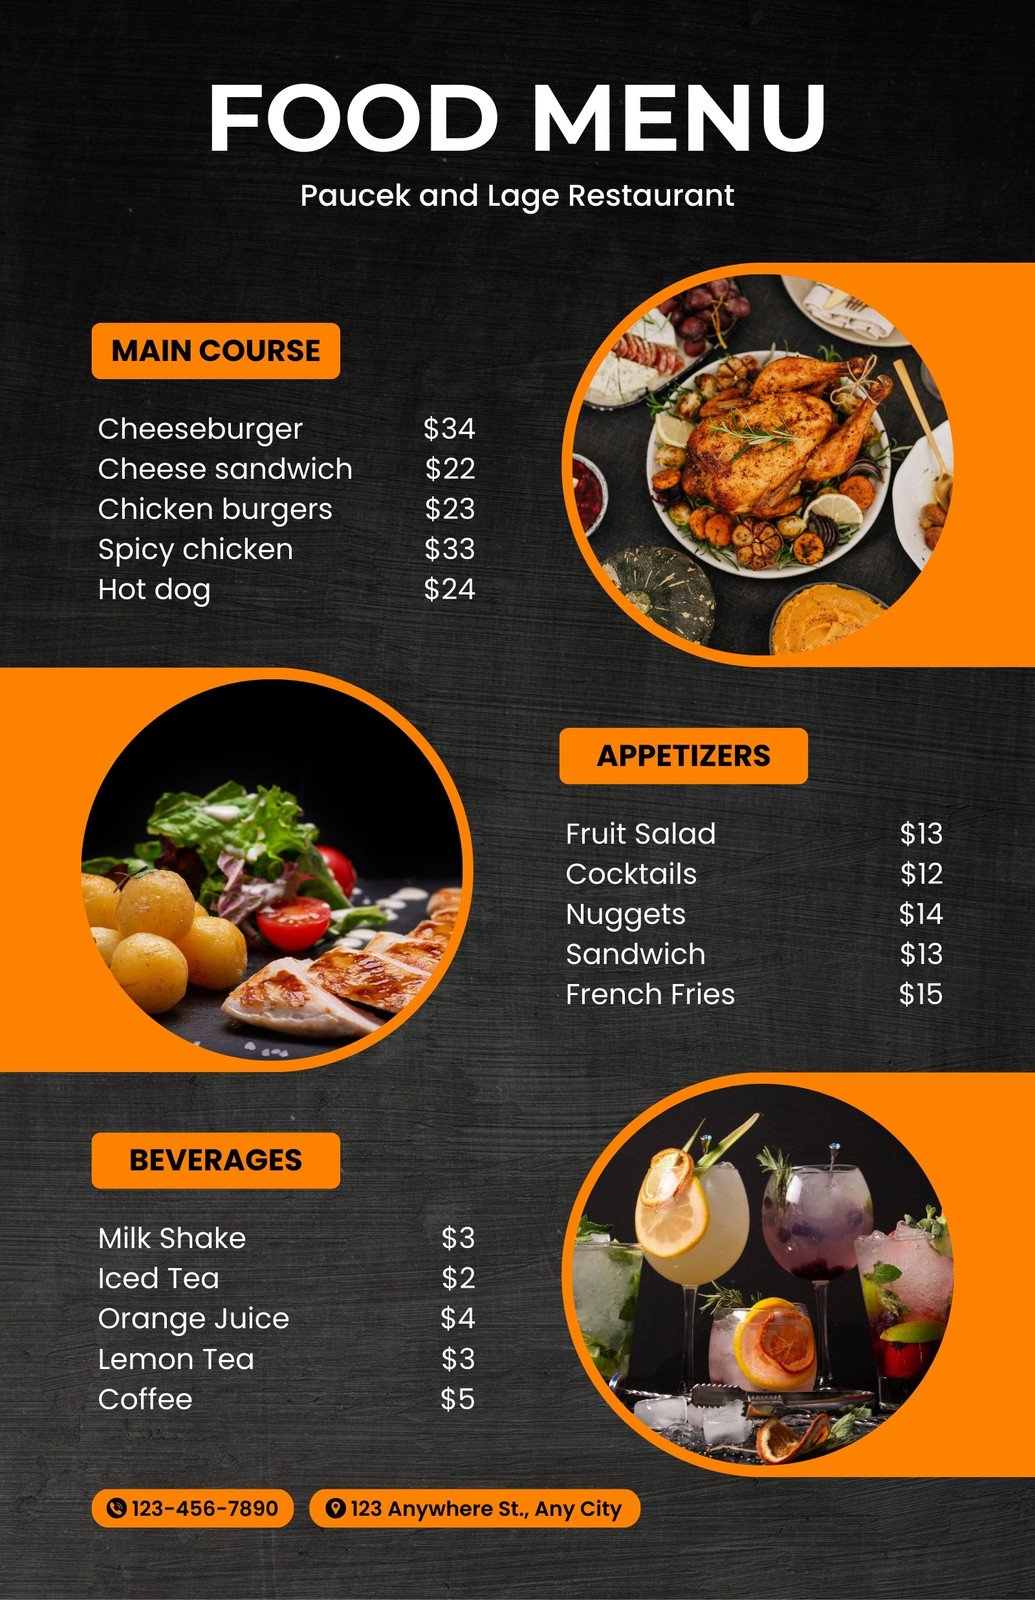 https://marketplace.canva.com/EAFwRADHMsM/1/0/1035w/canva-orange-and-black-bold-geometric-restaurant-menu-AX4bhelWqNA.jpg